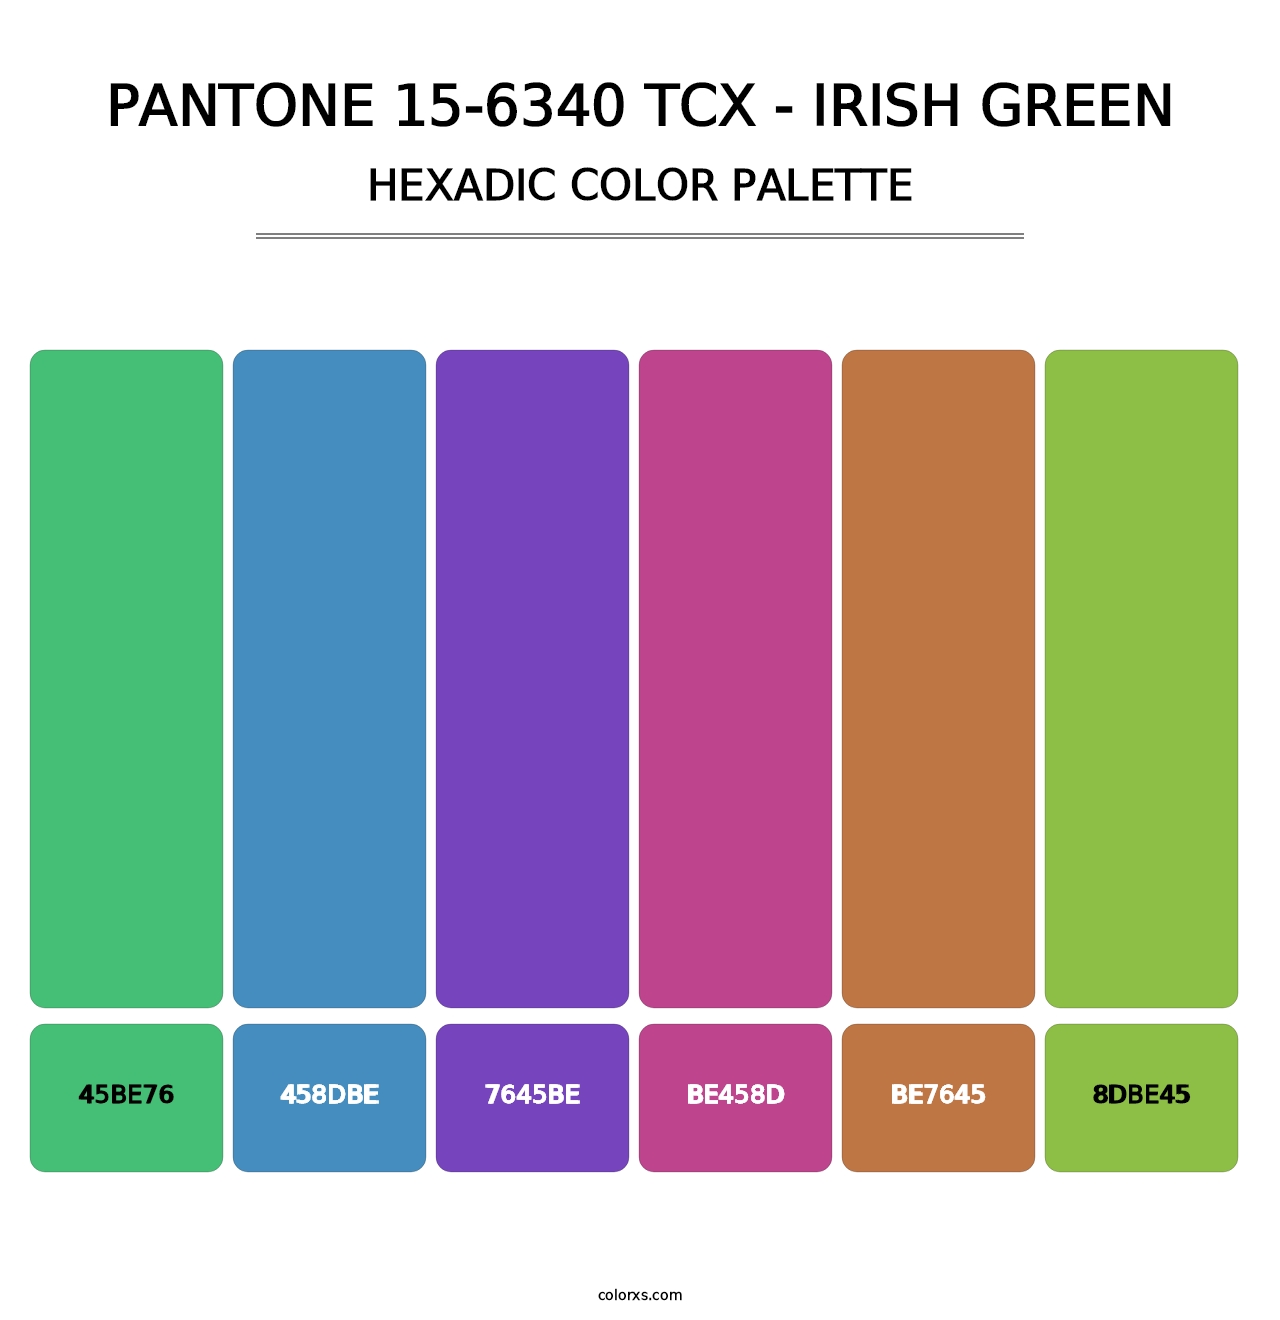 PANTONE 15-6340 TCX - Irish Green - Hexadic Color Palette